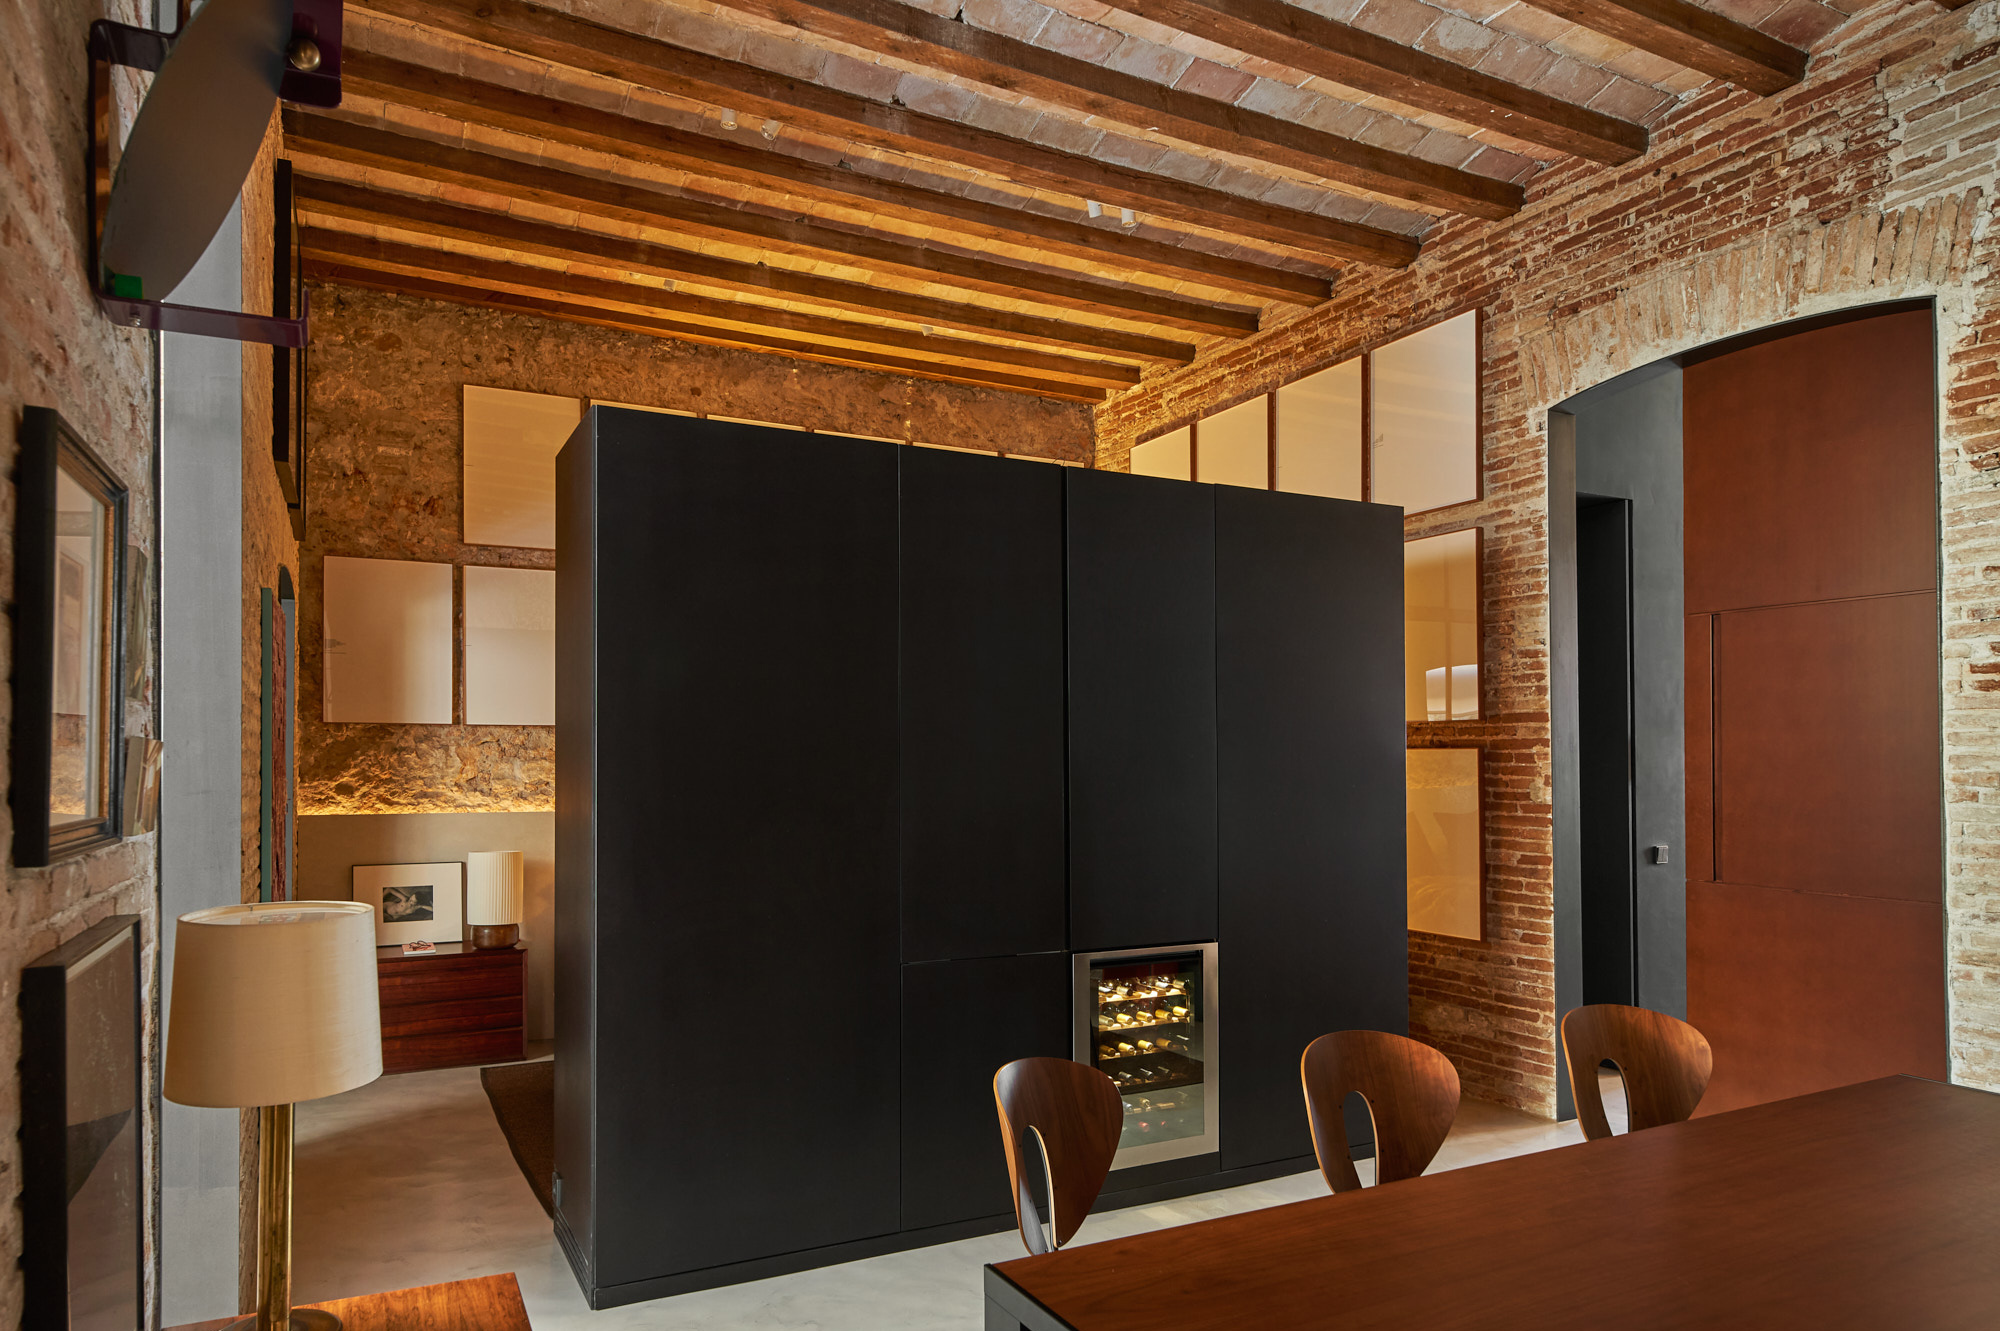 Brick interior loft in Barcelona designed by Architects